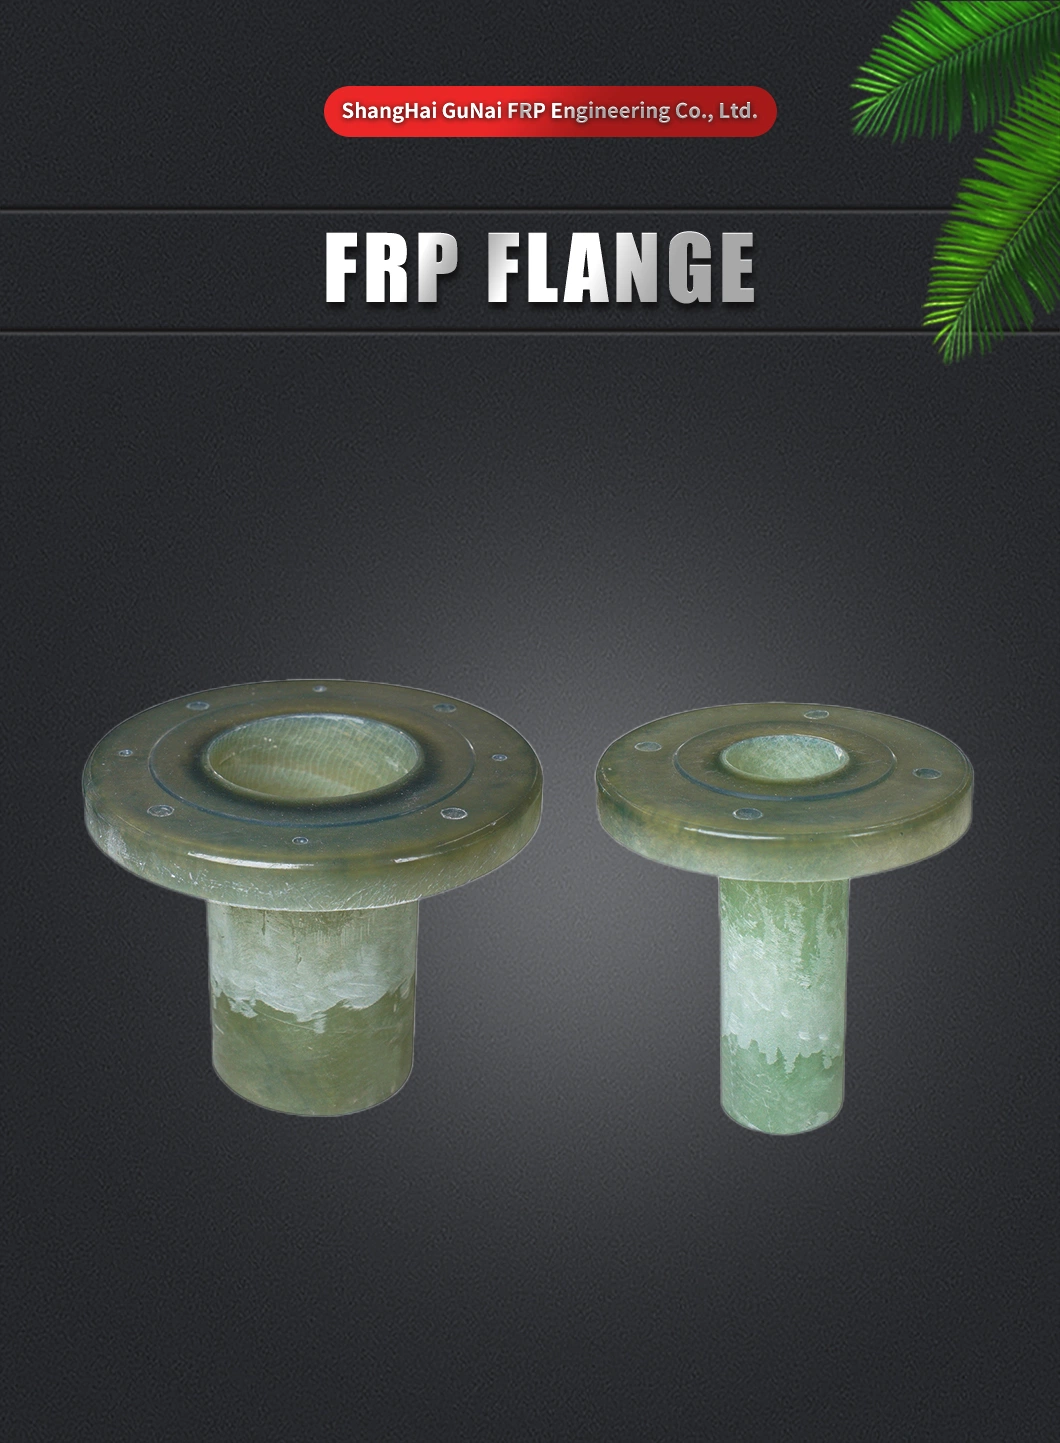 Unique Configurations with Customizable FRP Flange